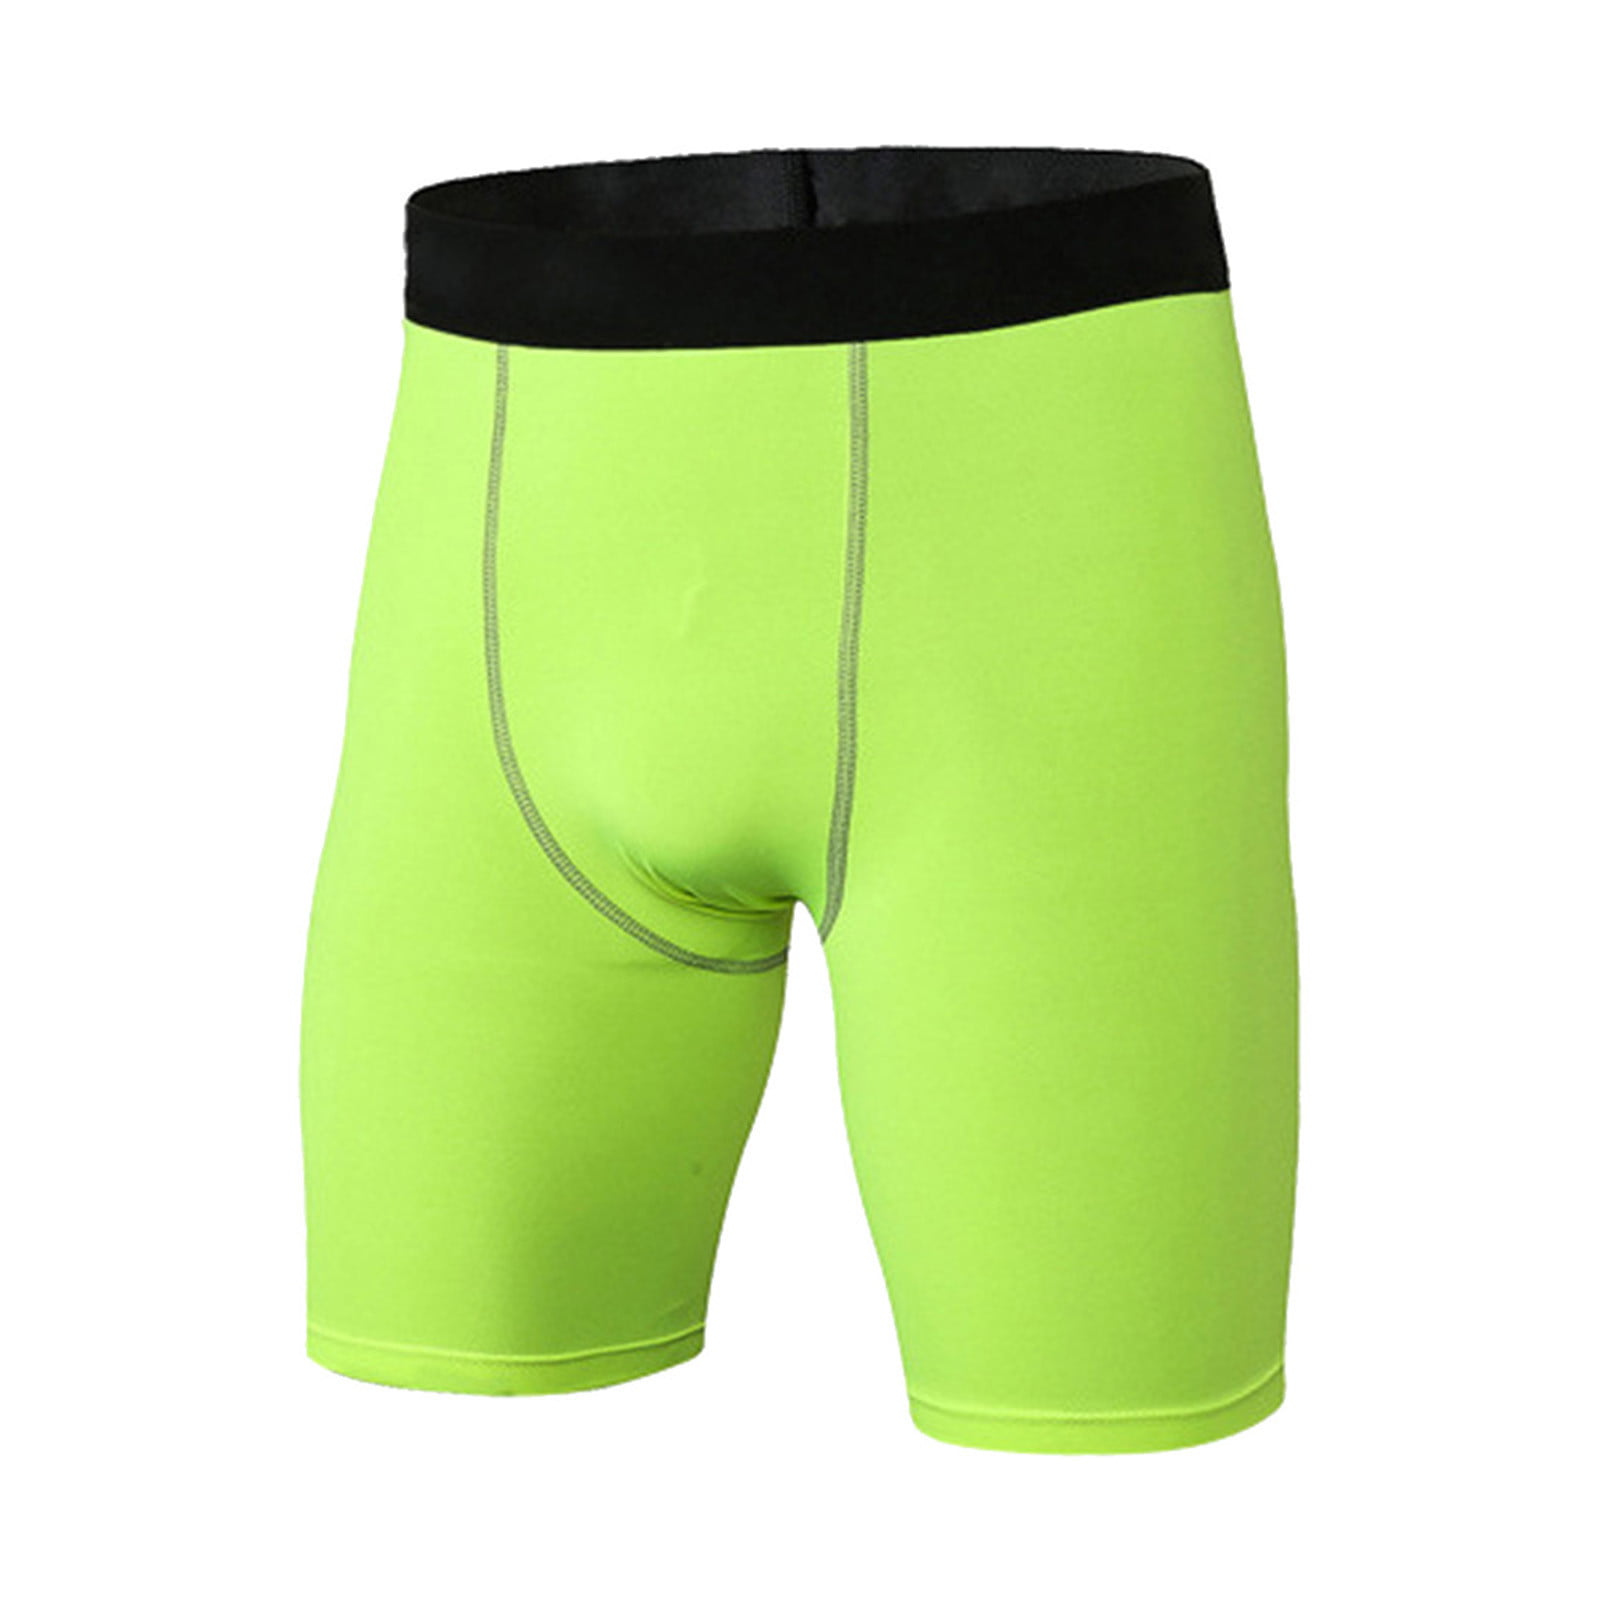 Nicesee Men's Sports Skin Tights Base Pants